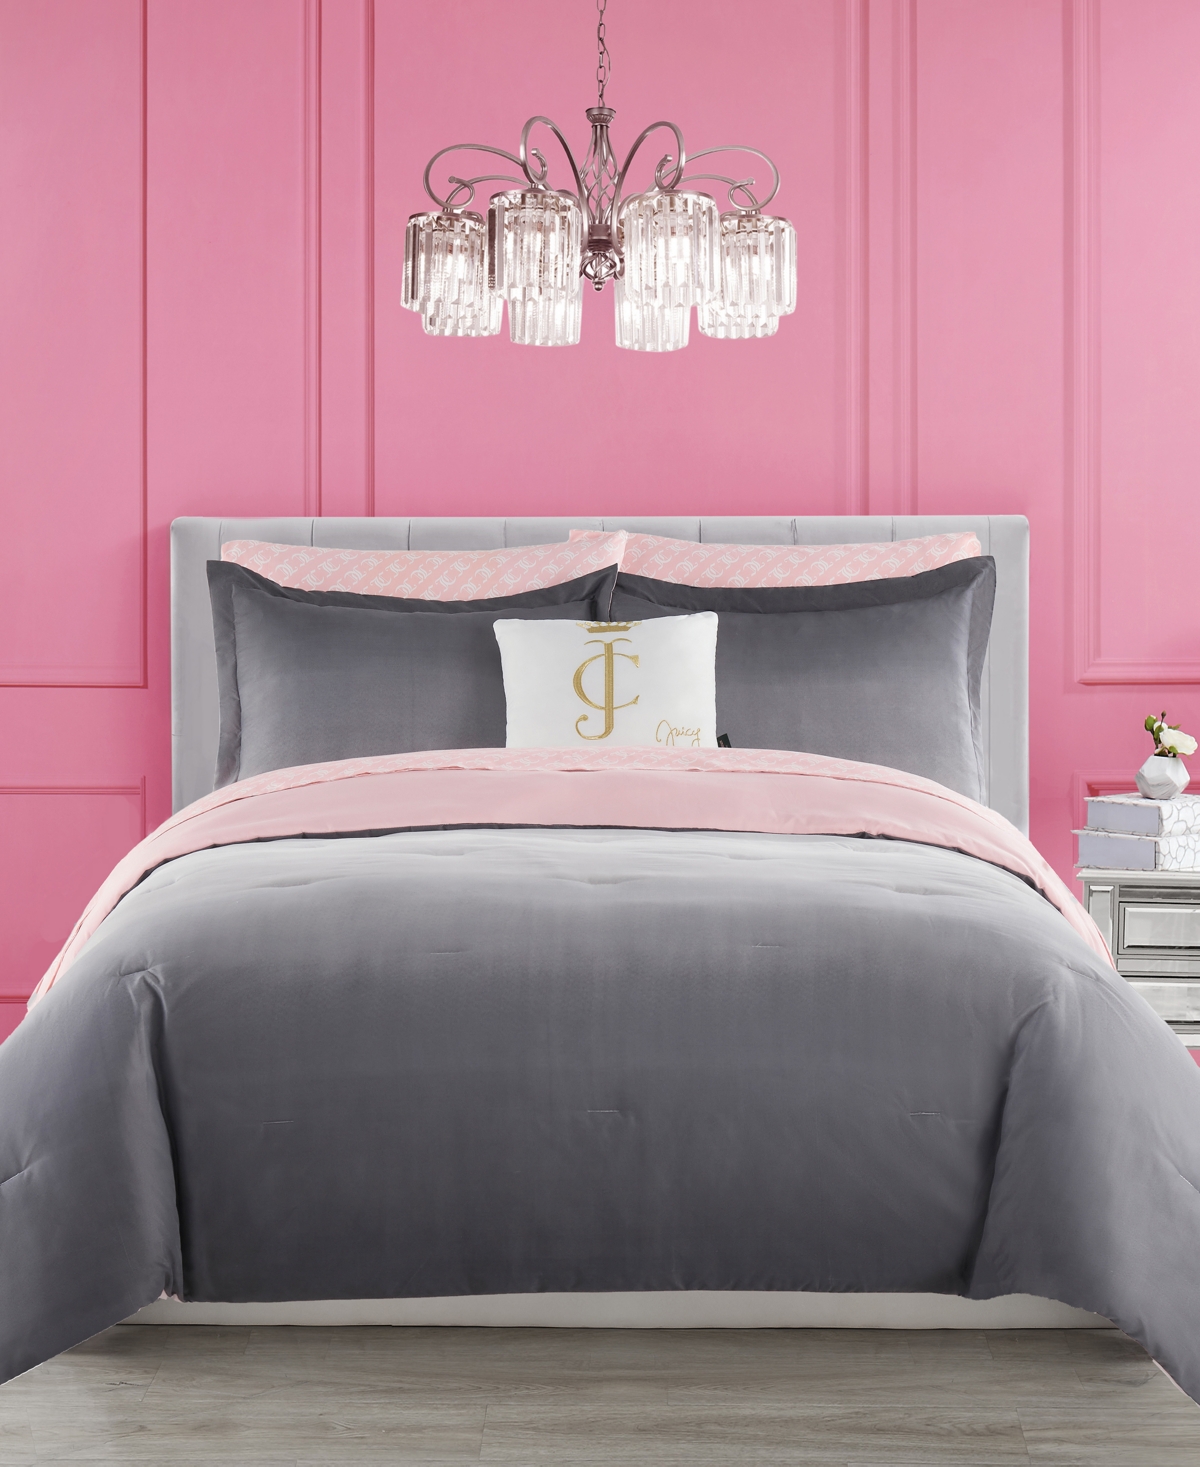 Juicy Couture Allister Ombre 8-pc. Comforter Set, Queen In Gray,pink